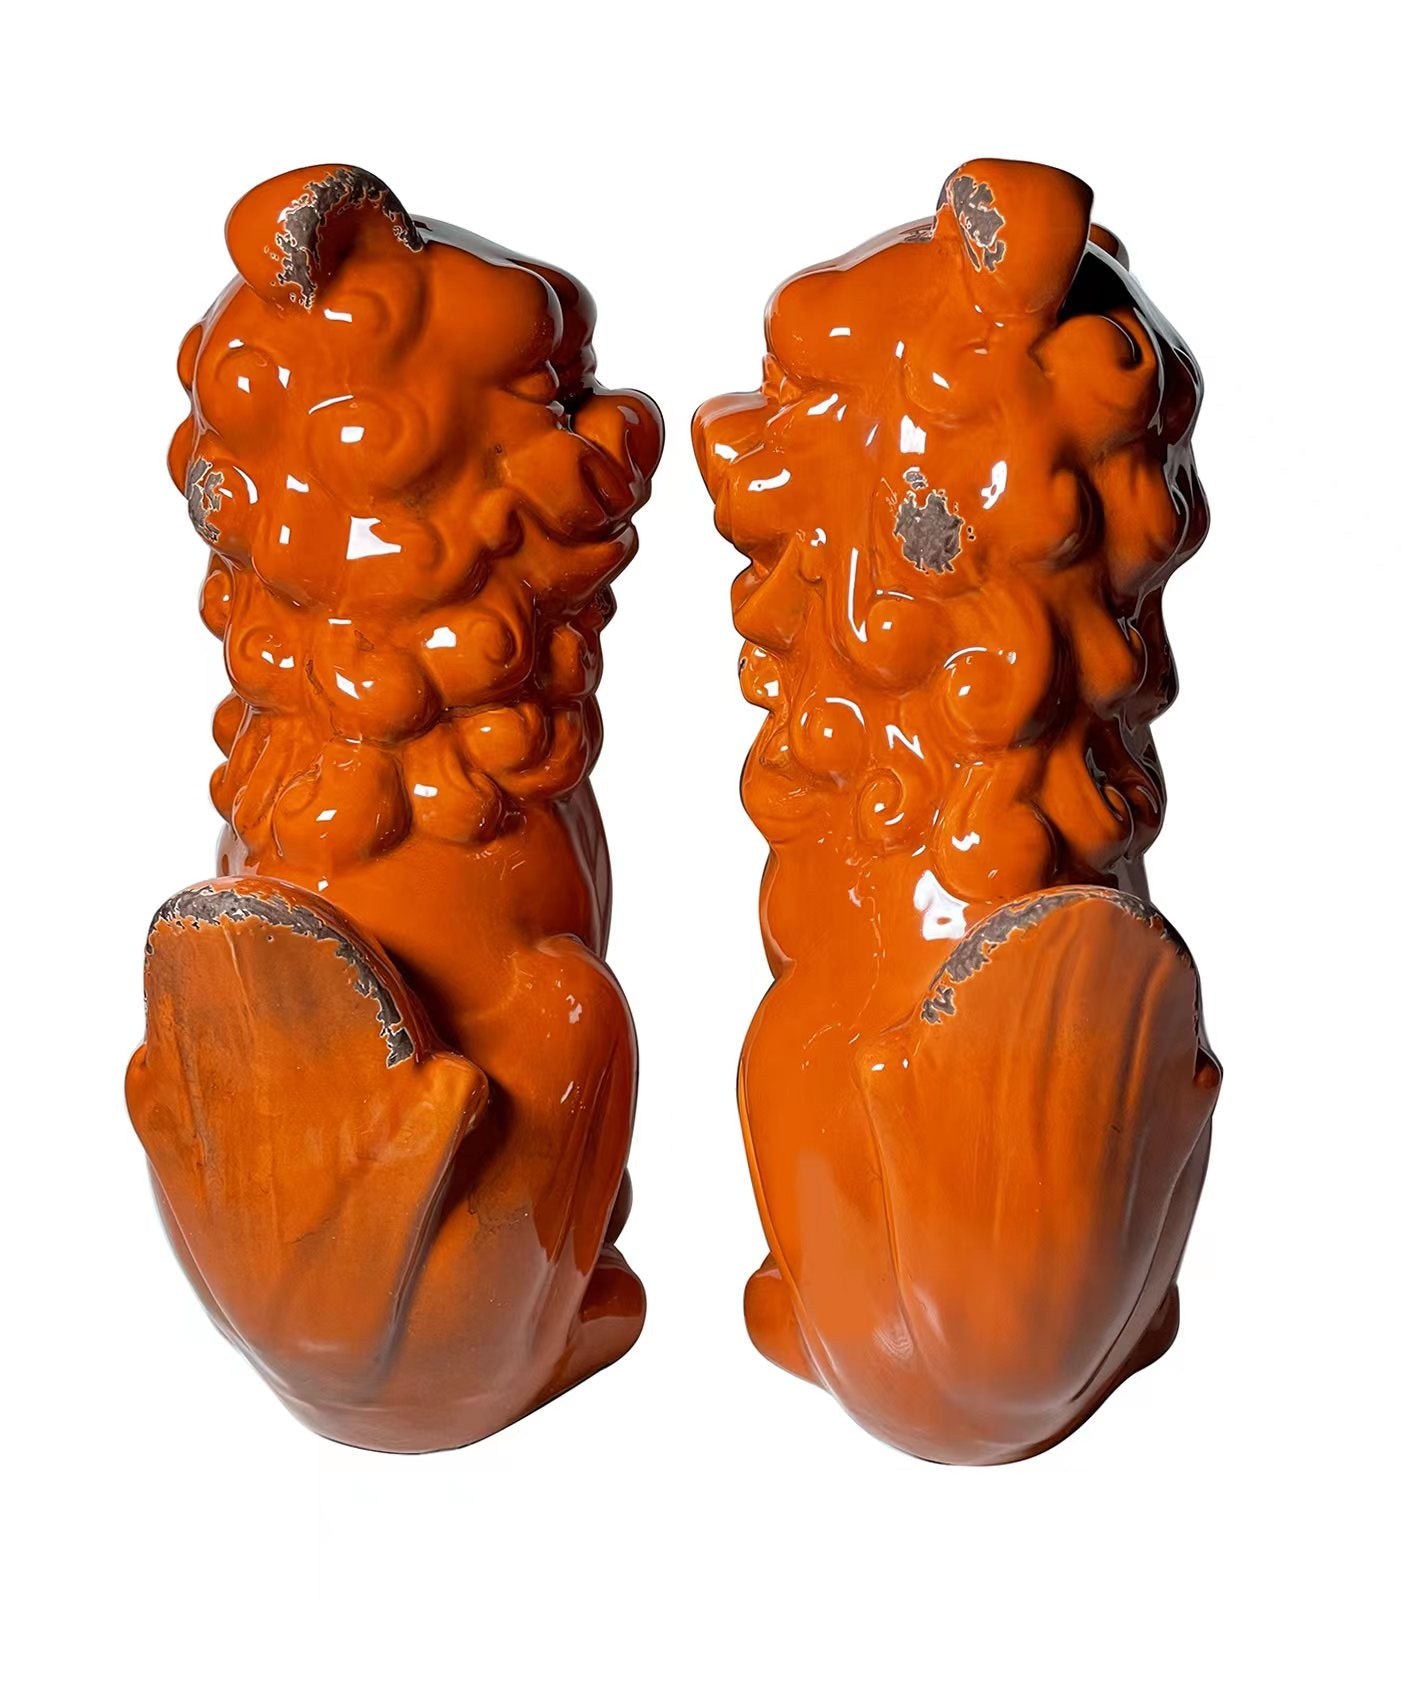 Set of Two Orange Ceramic Dog Sculptures